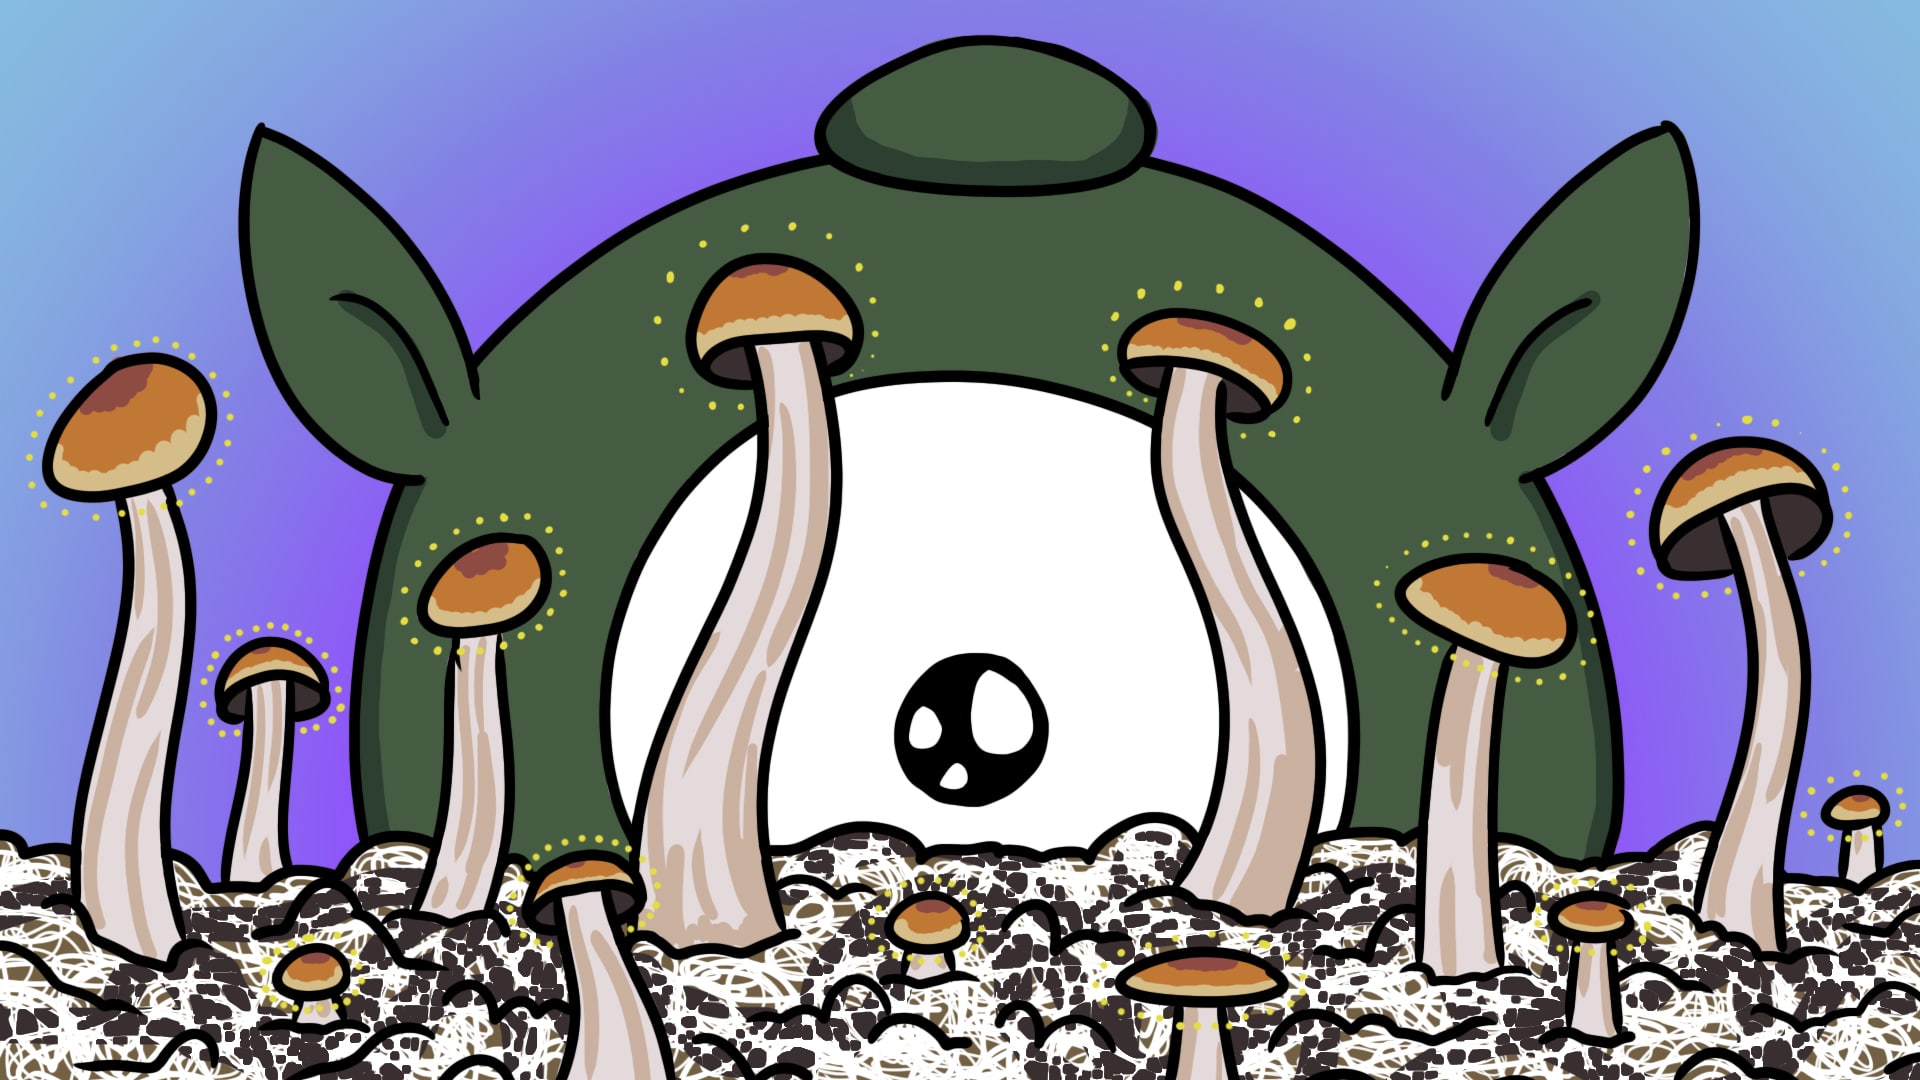 Medicine man growing magic mushrooms